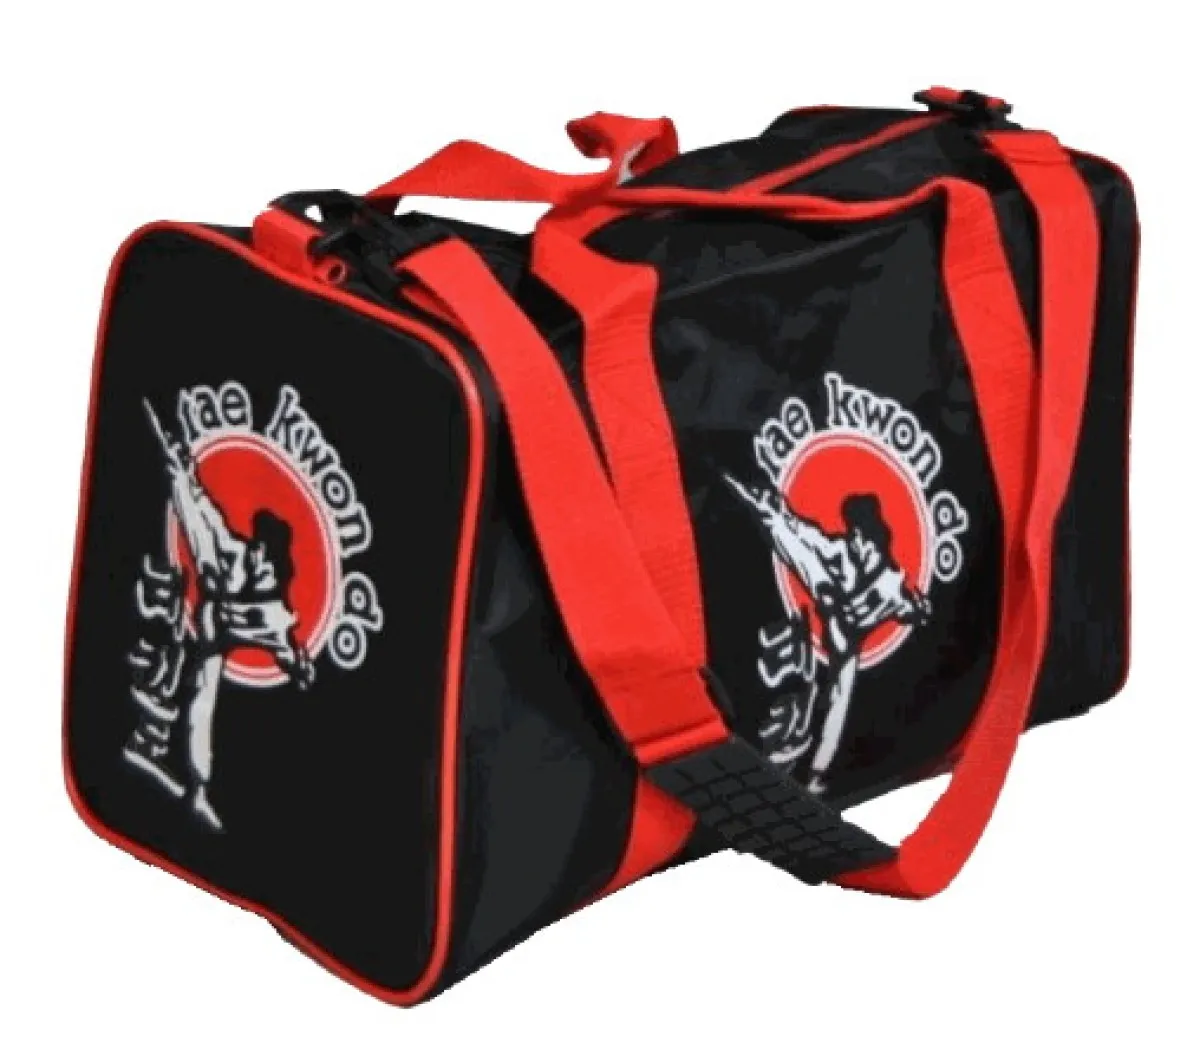 Sports bag with Taekwondo print